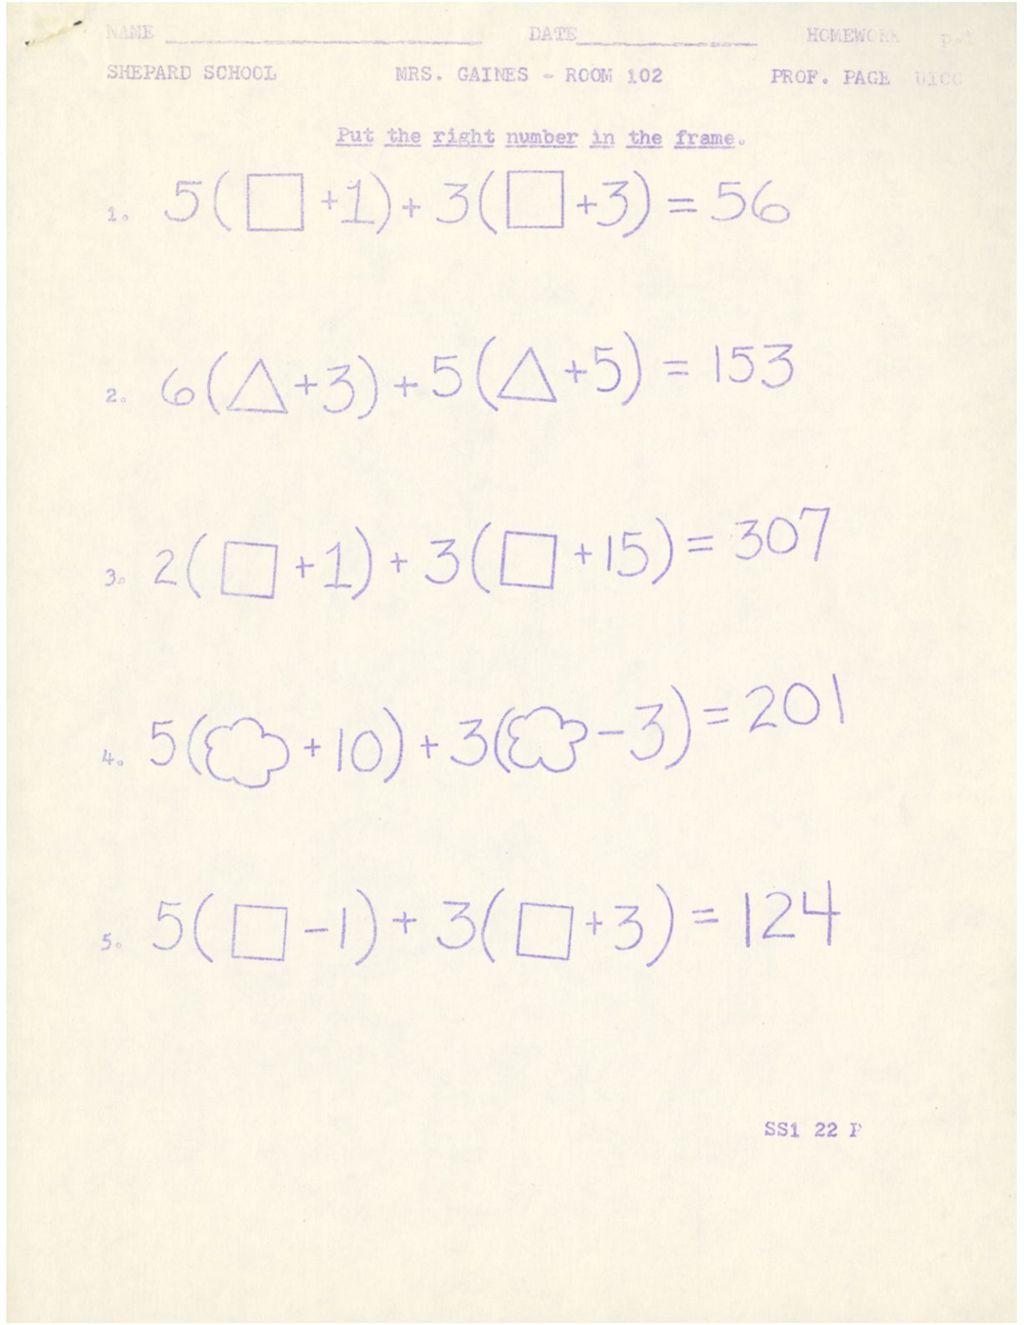 Miniature of Shepard School Mrs. Gains 102 5( box + 1) + 3 ( box + 3) = 56